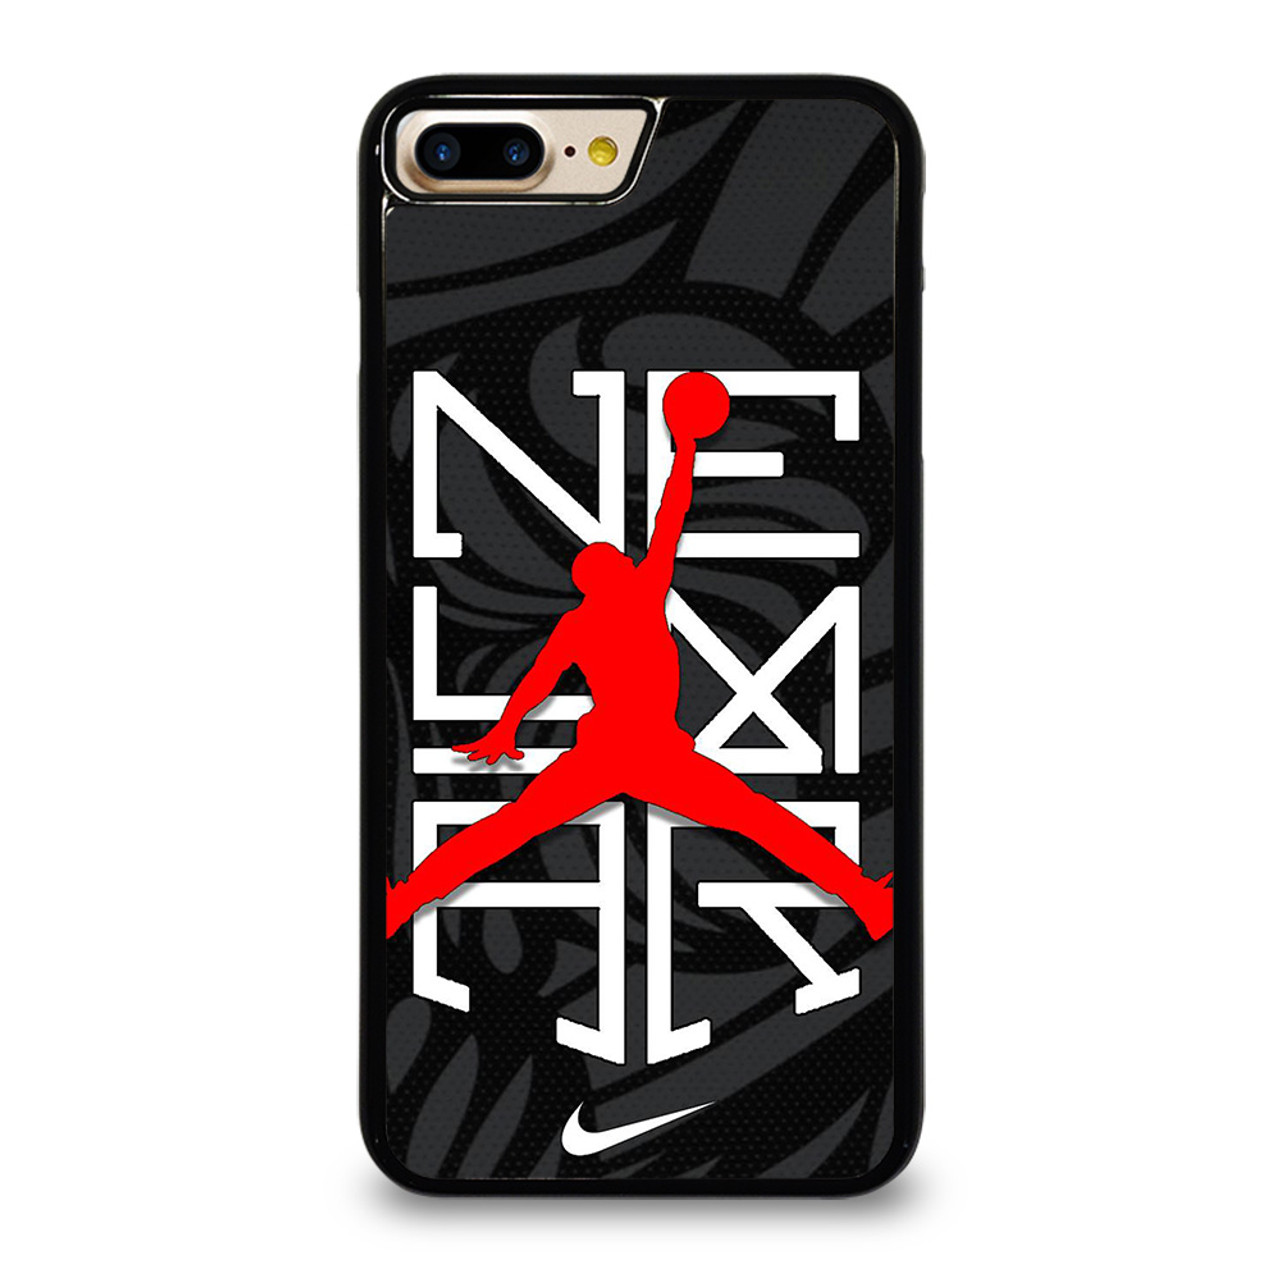 Supreme x Air Jordan iPhone 7 Plus Clear Case